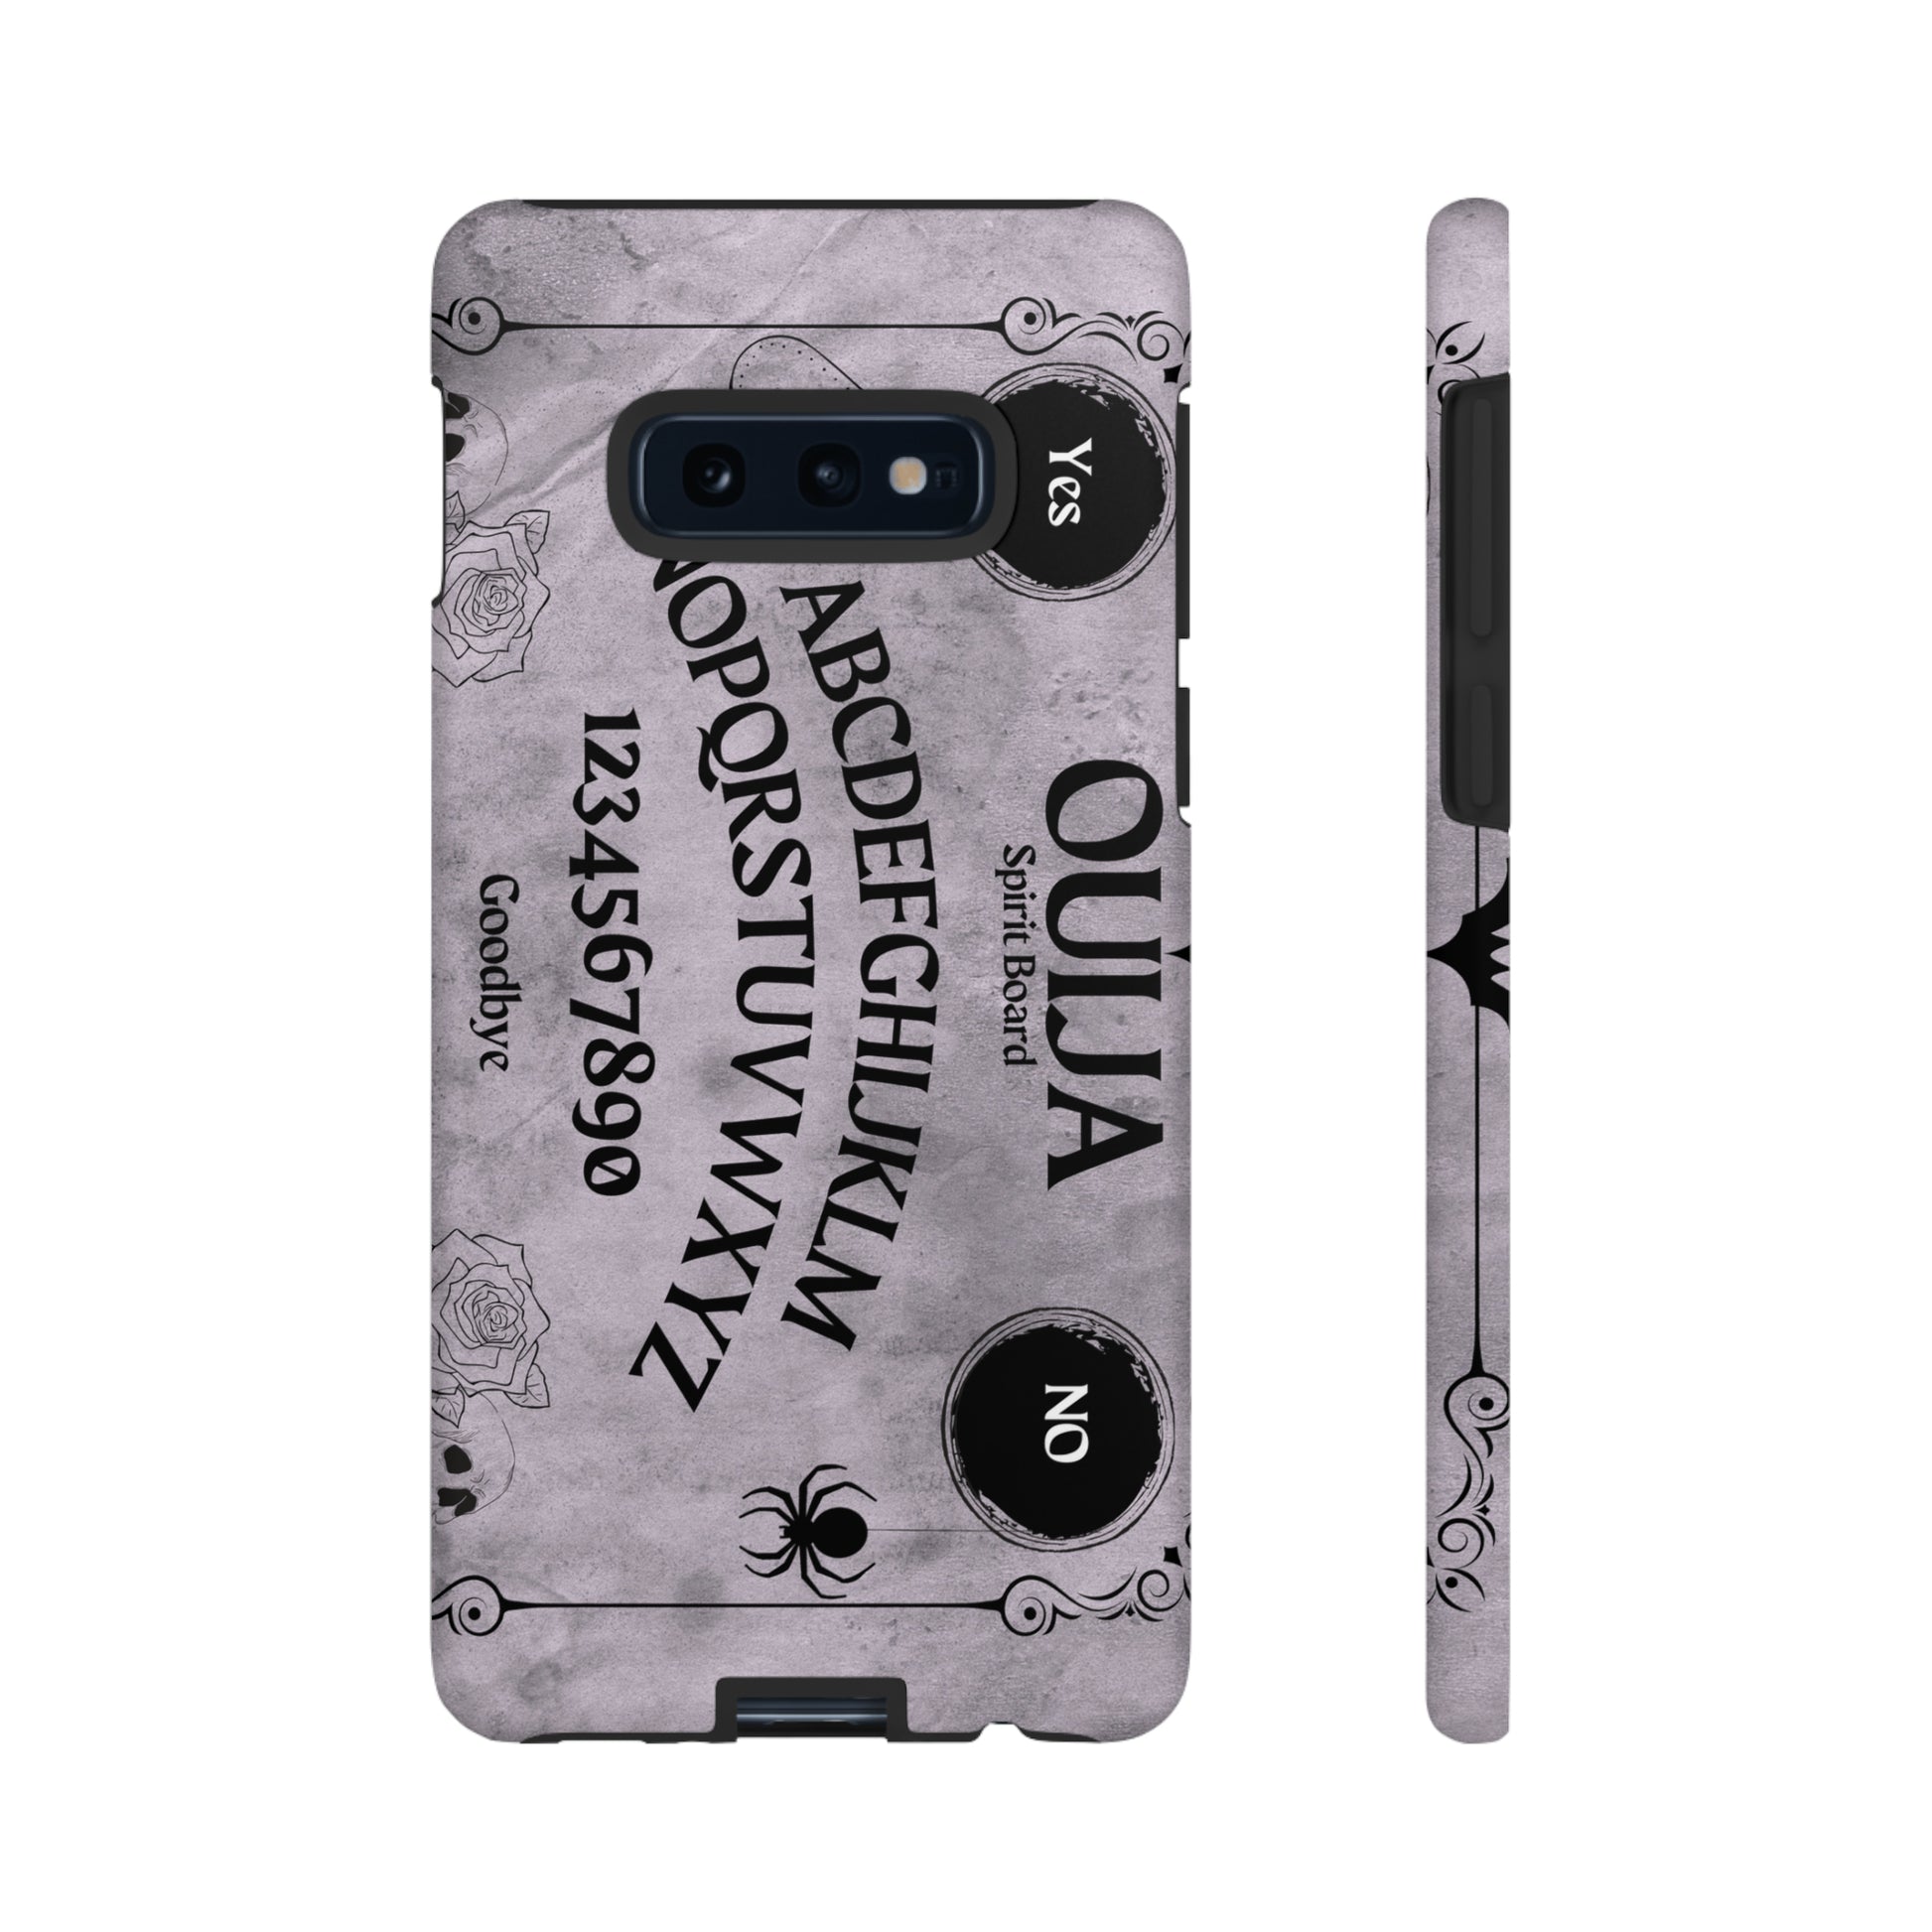 Ouija Board Tough Phone Cases For Samsung iPhone GooglePhone CaseVTZdesignsSamsung Galaxy S10EMatteAccessoriesGlossyhalloween